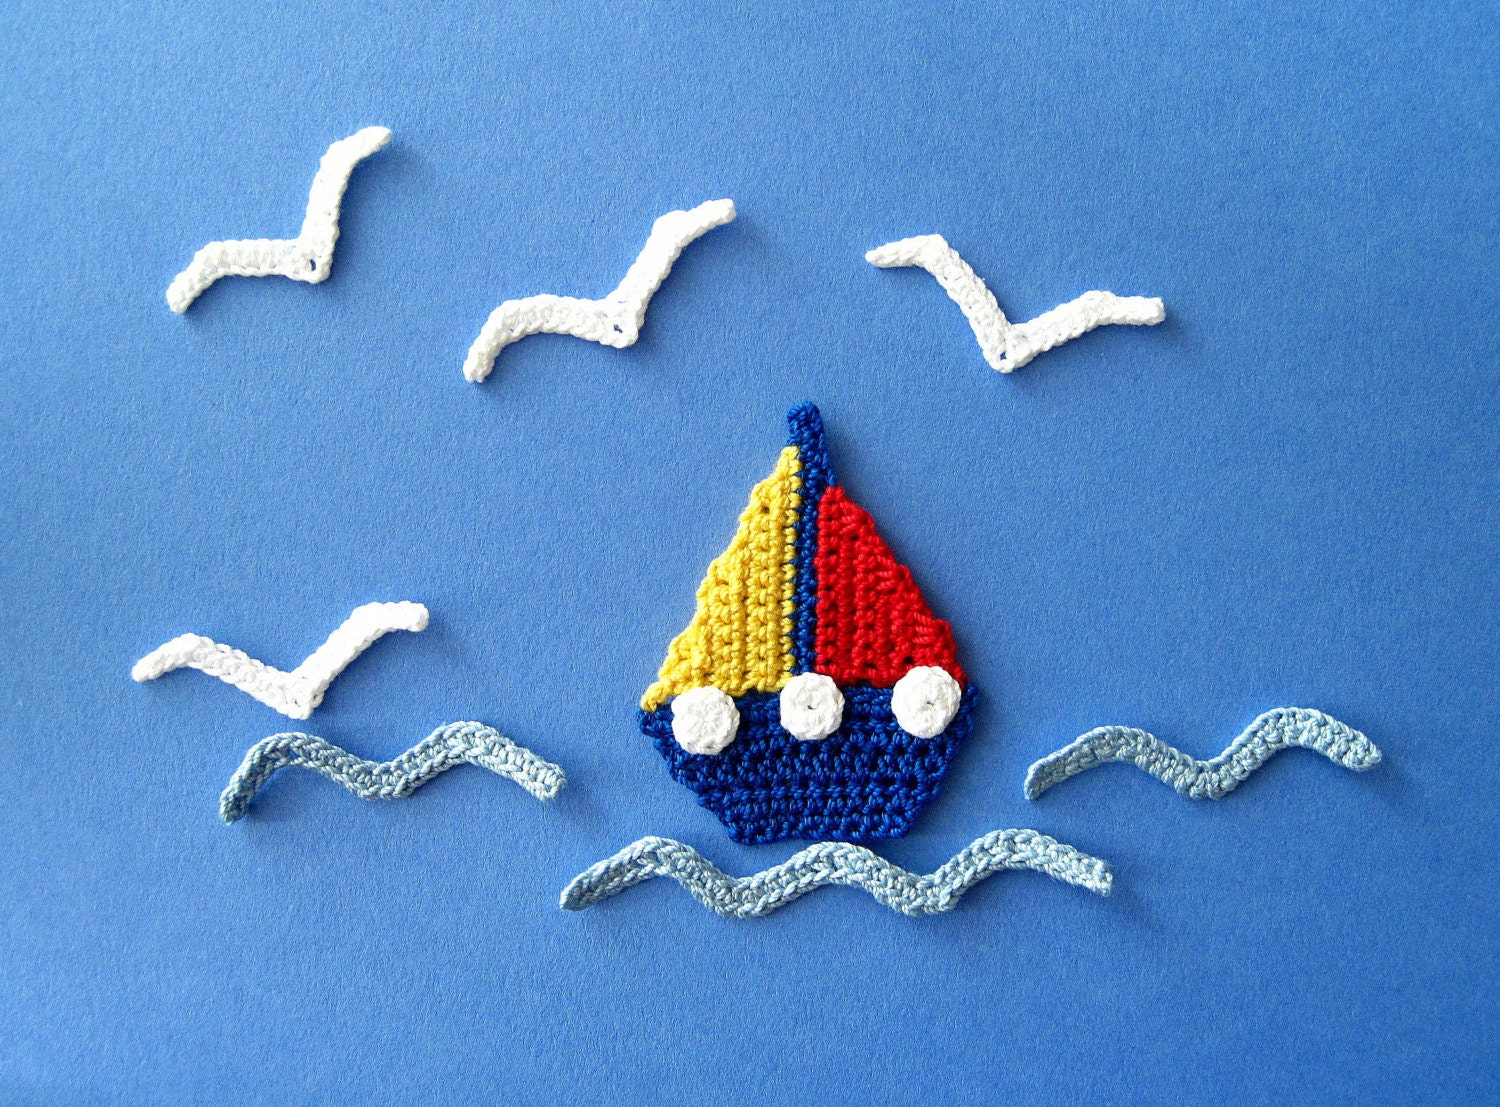 ahoy! drop anchor for nautical crochet patterns! - moogly